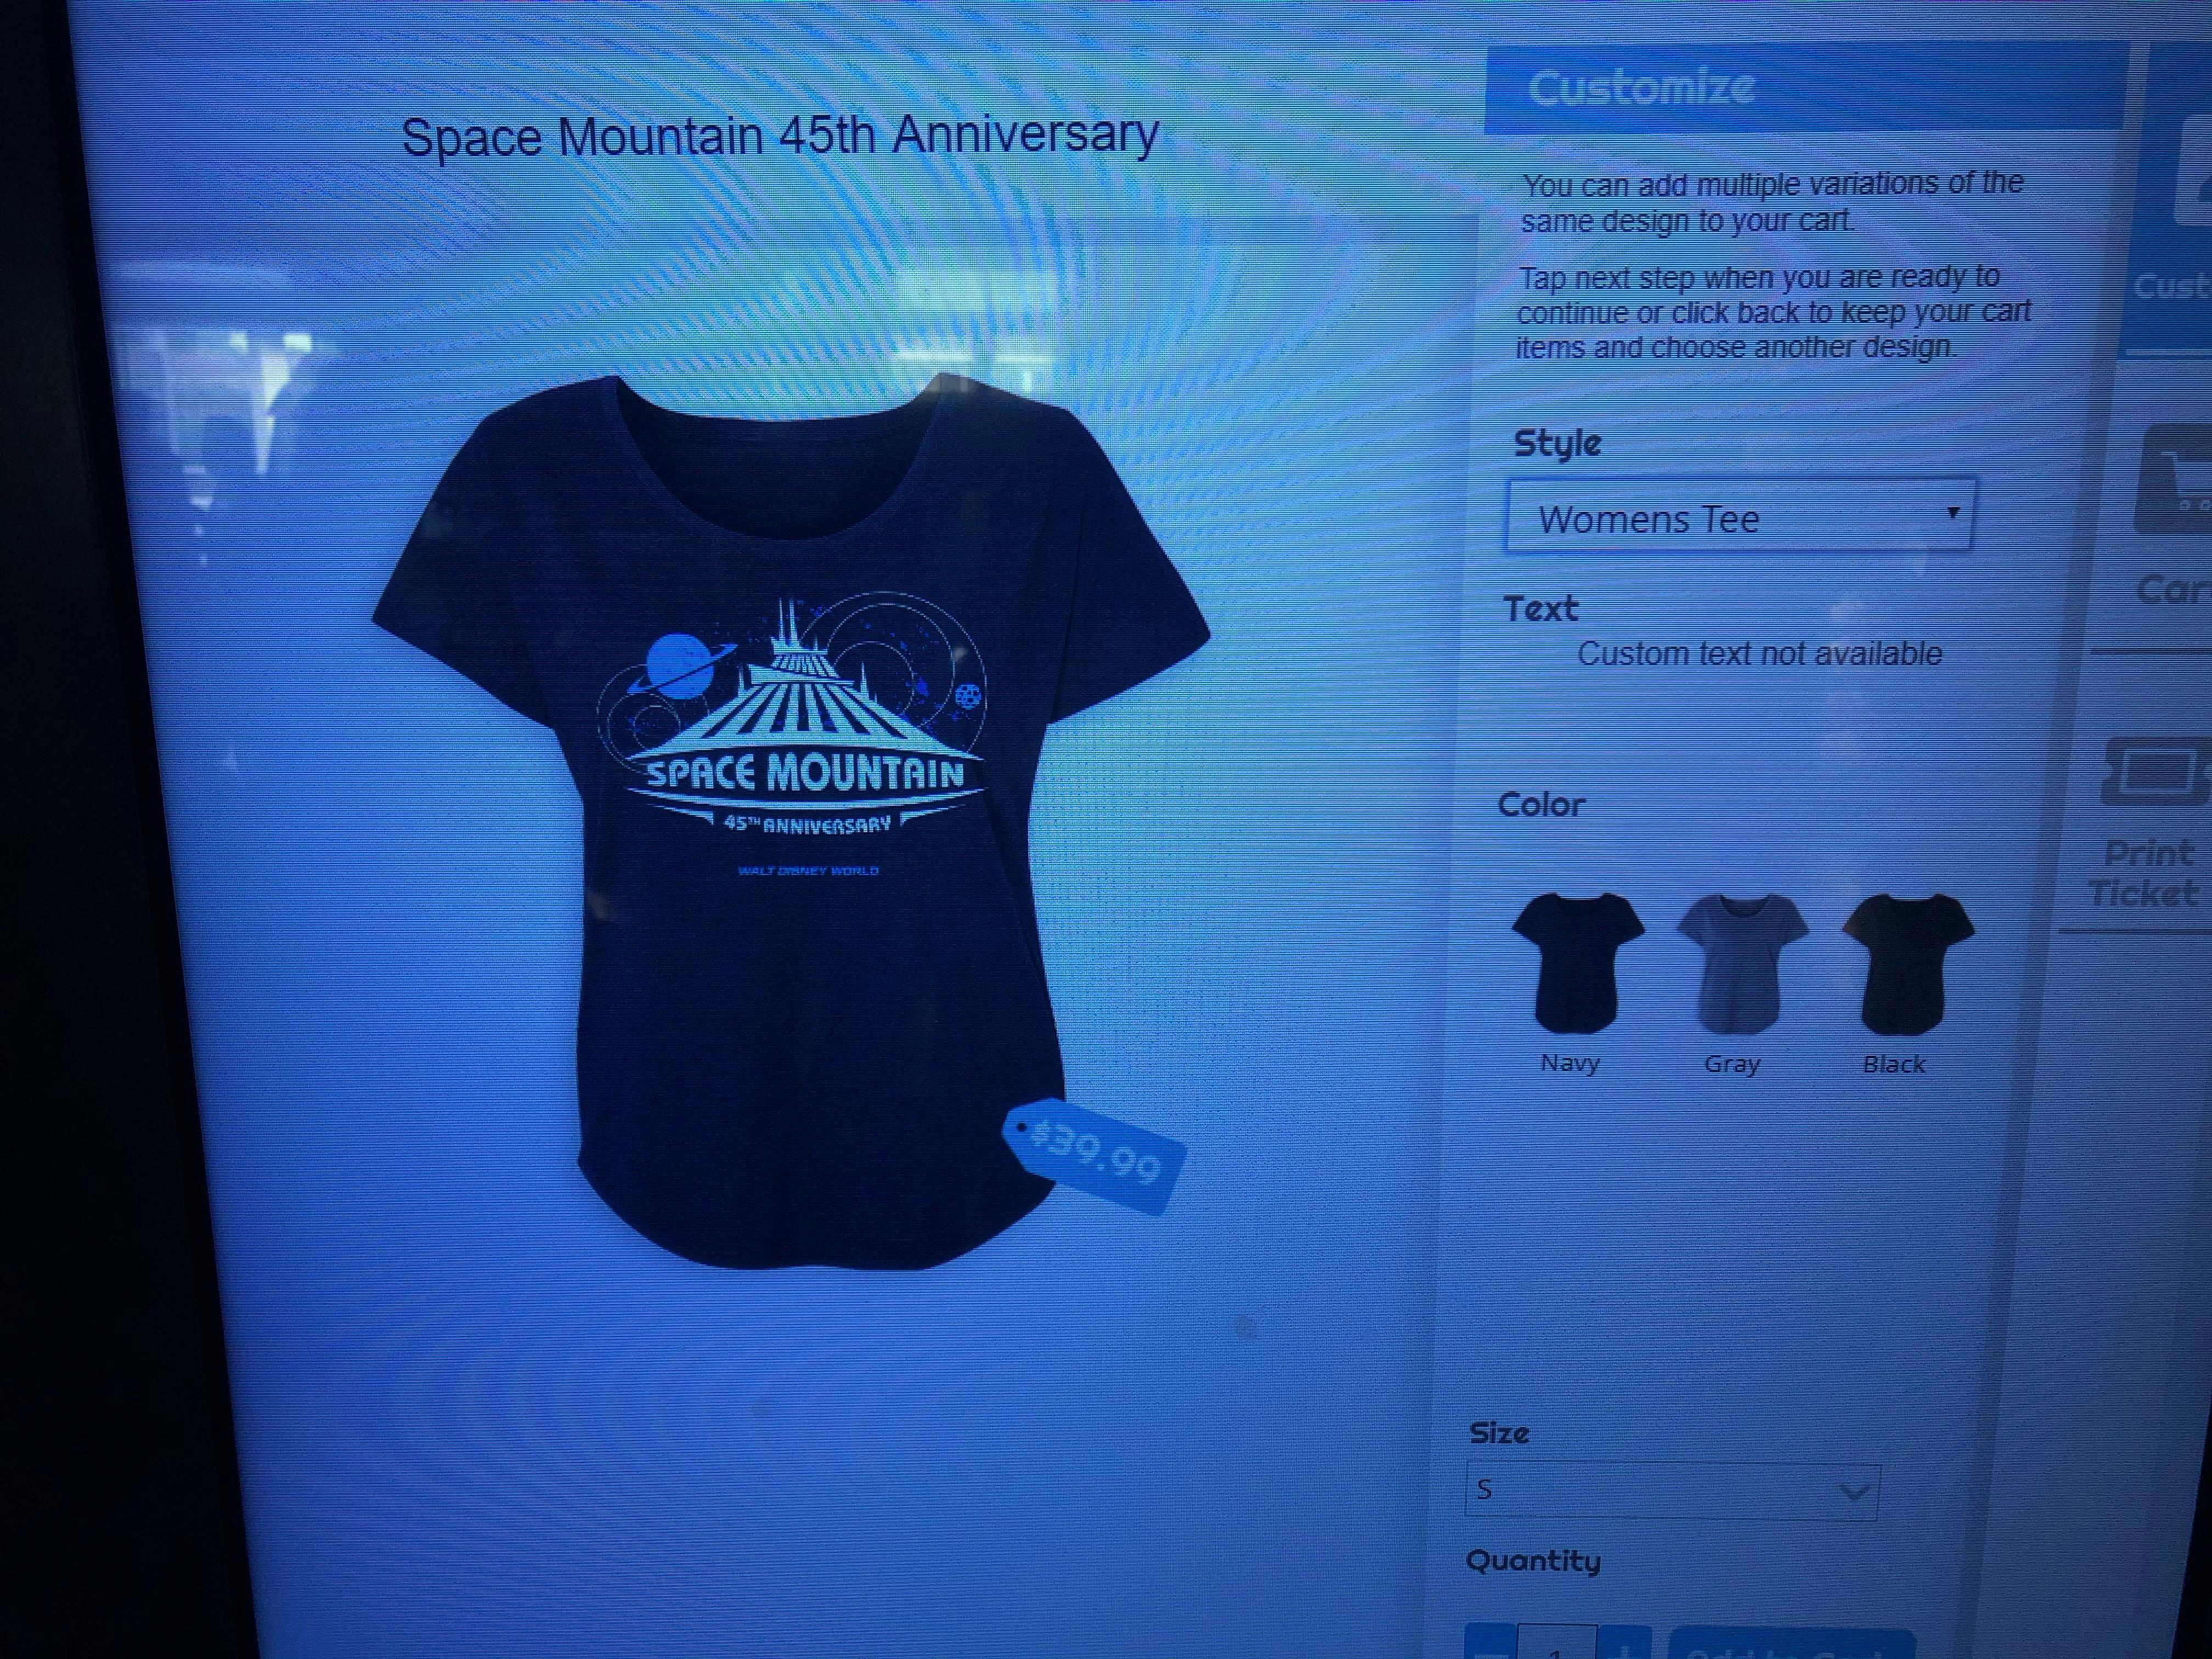 space mountain carousel of progress 45th anniversary merchandise 2020 10.jpg?auto=compress%2Cformat&ixlib=php 1.2